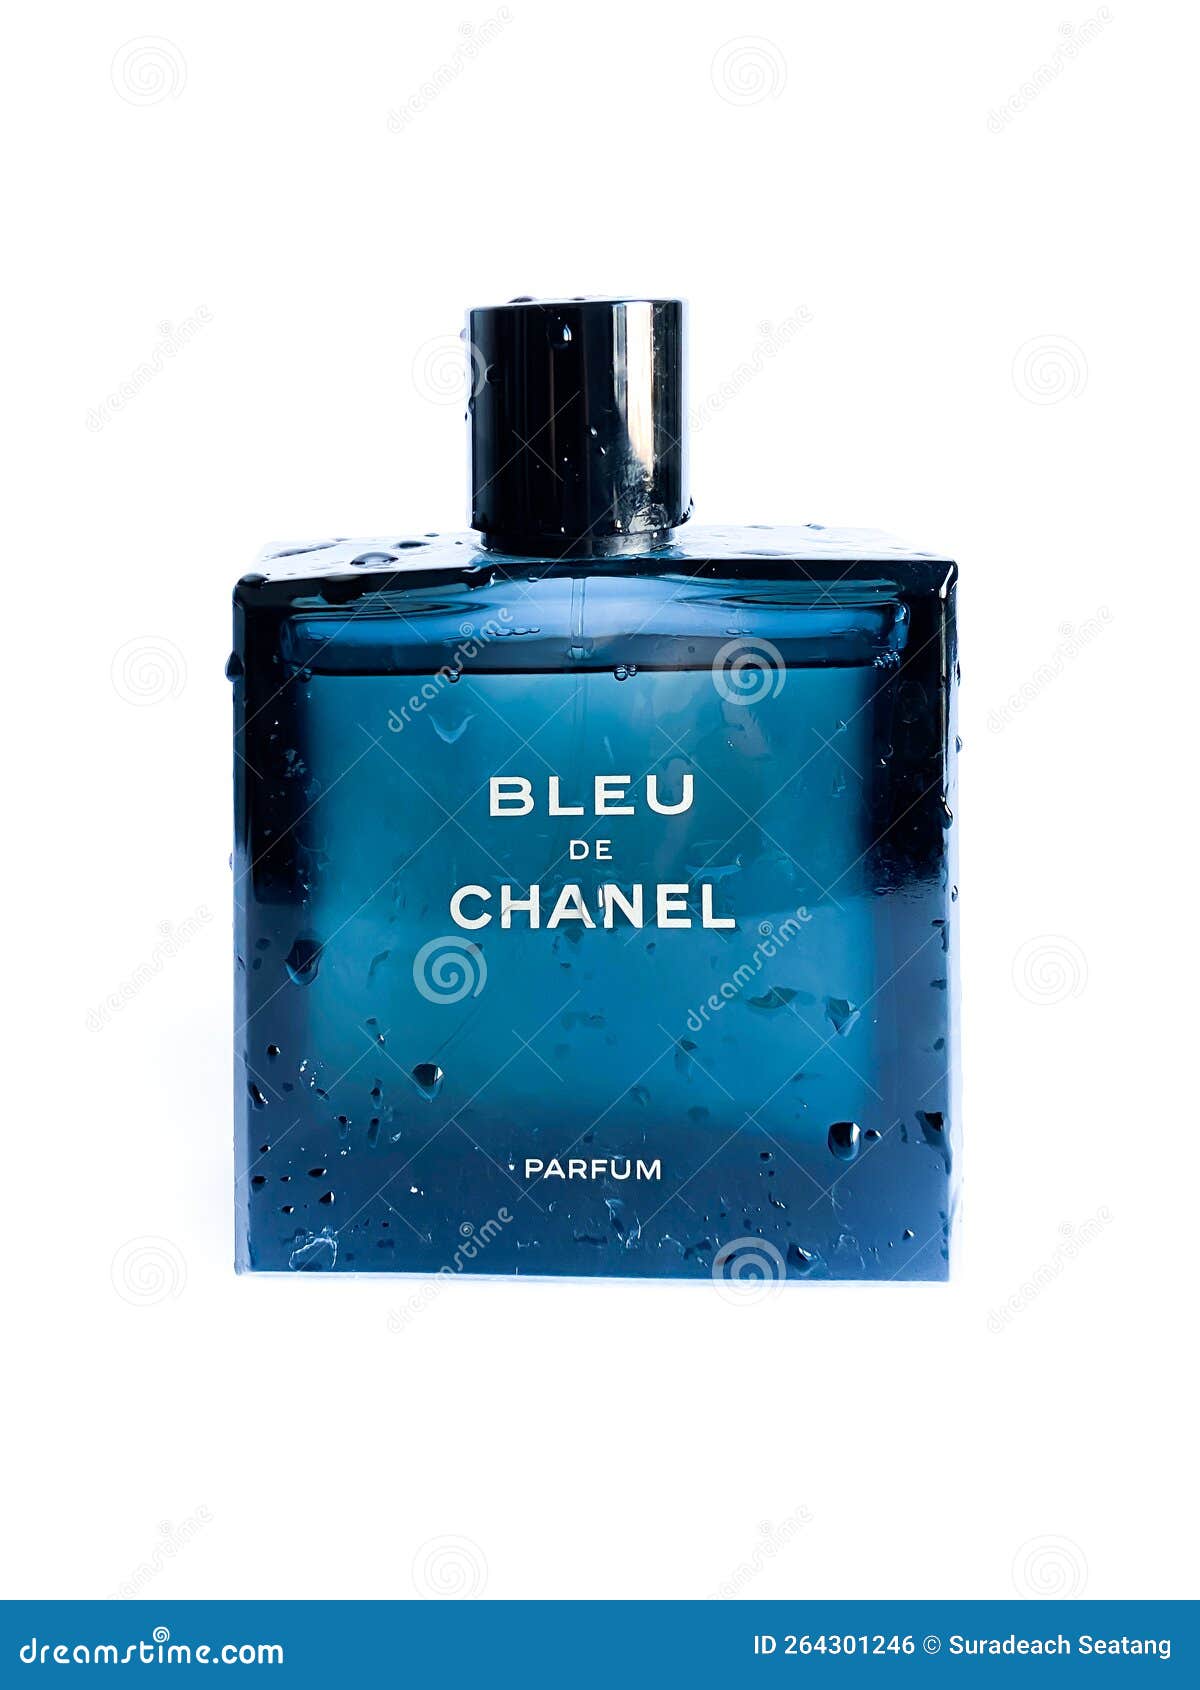 CHANEL Bleu De Chanel Men EDP Spray 5 oz for sale online